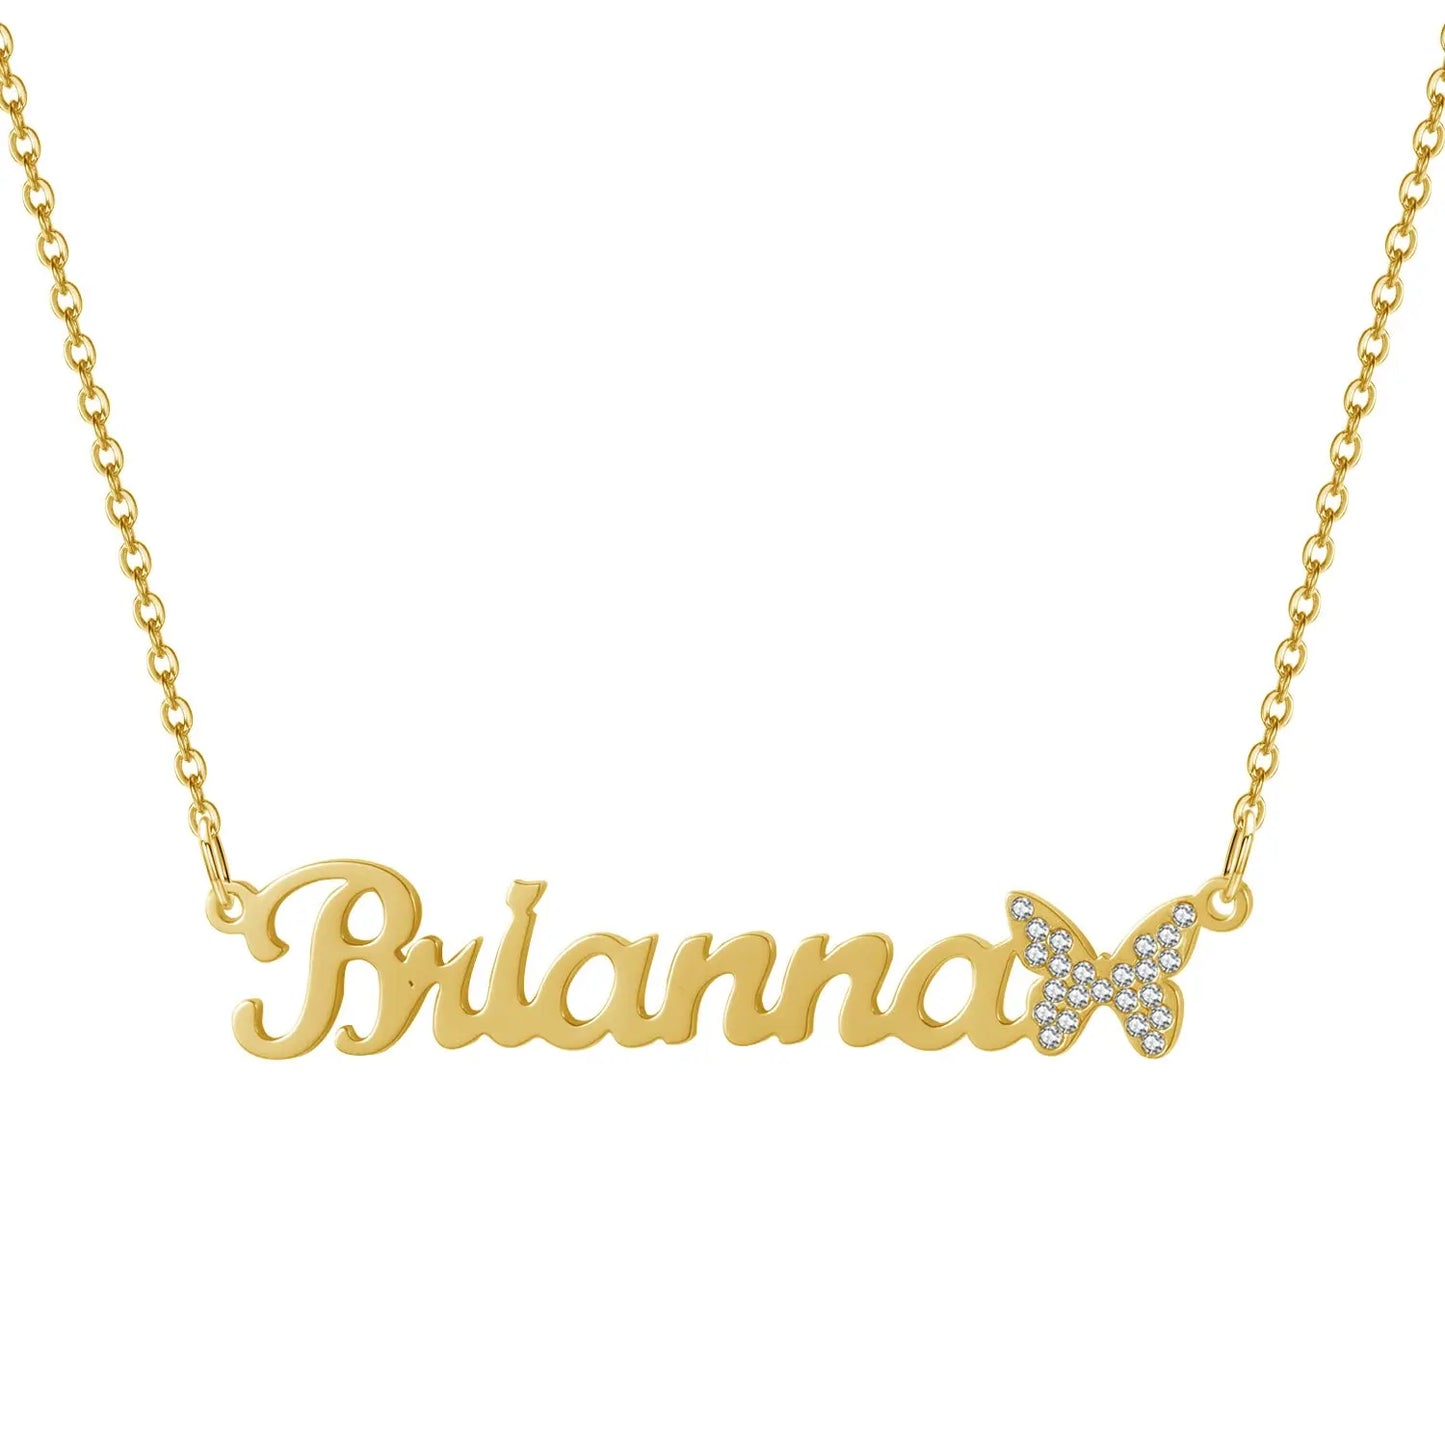 Custom Name Necklace With Butterfly - True Nova Jewelry Co.